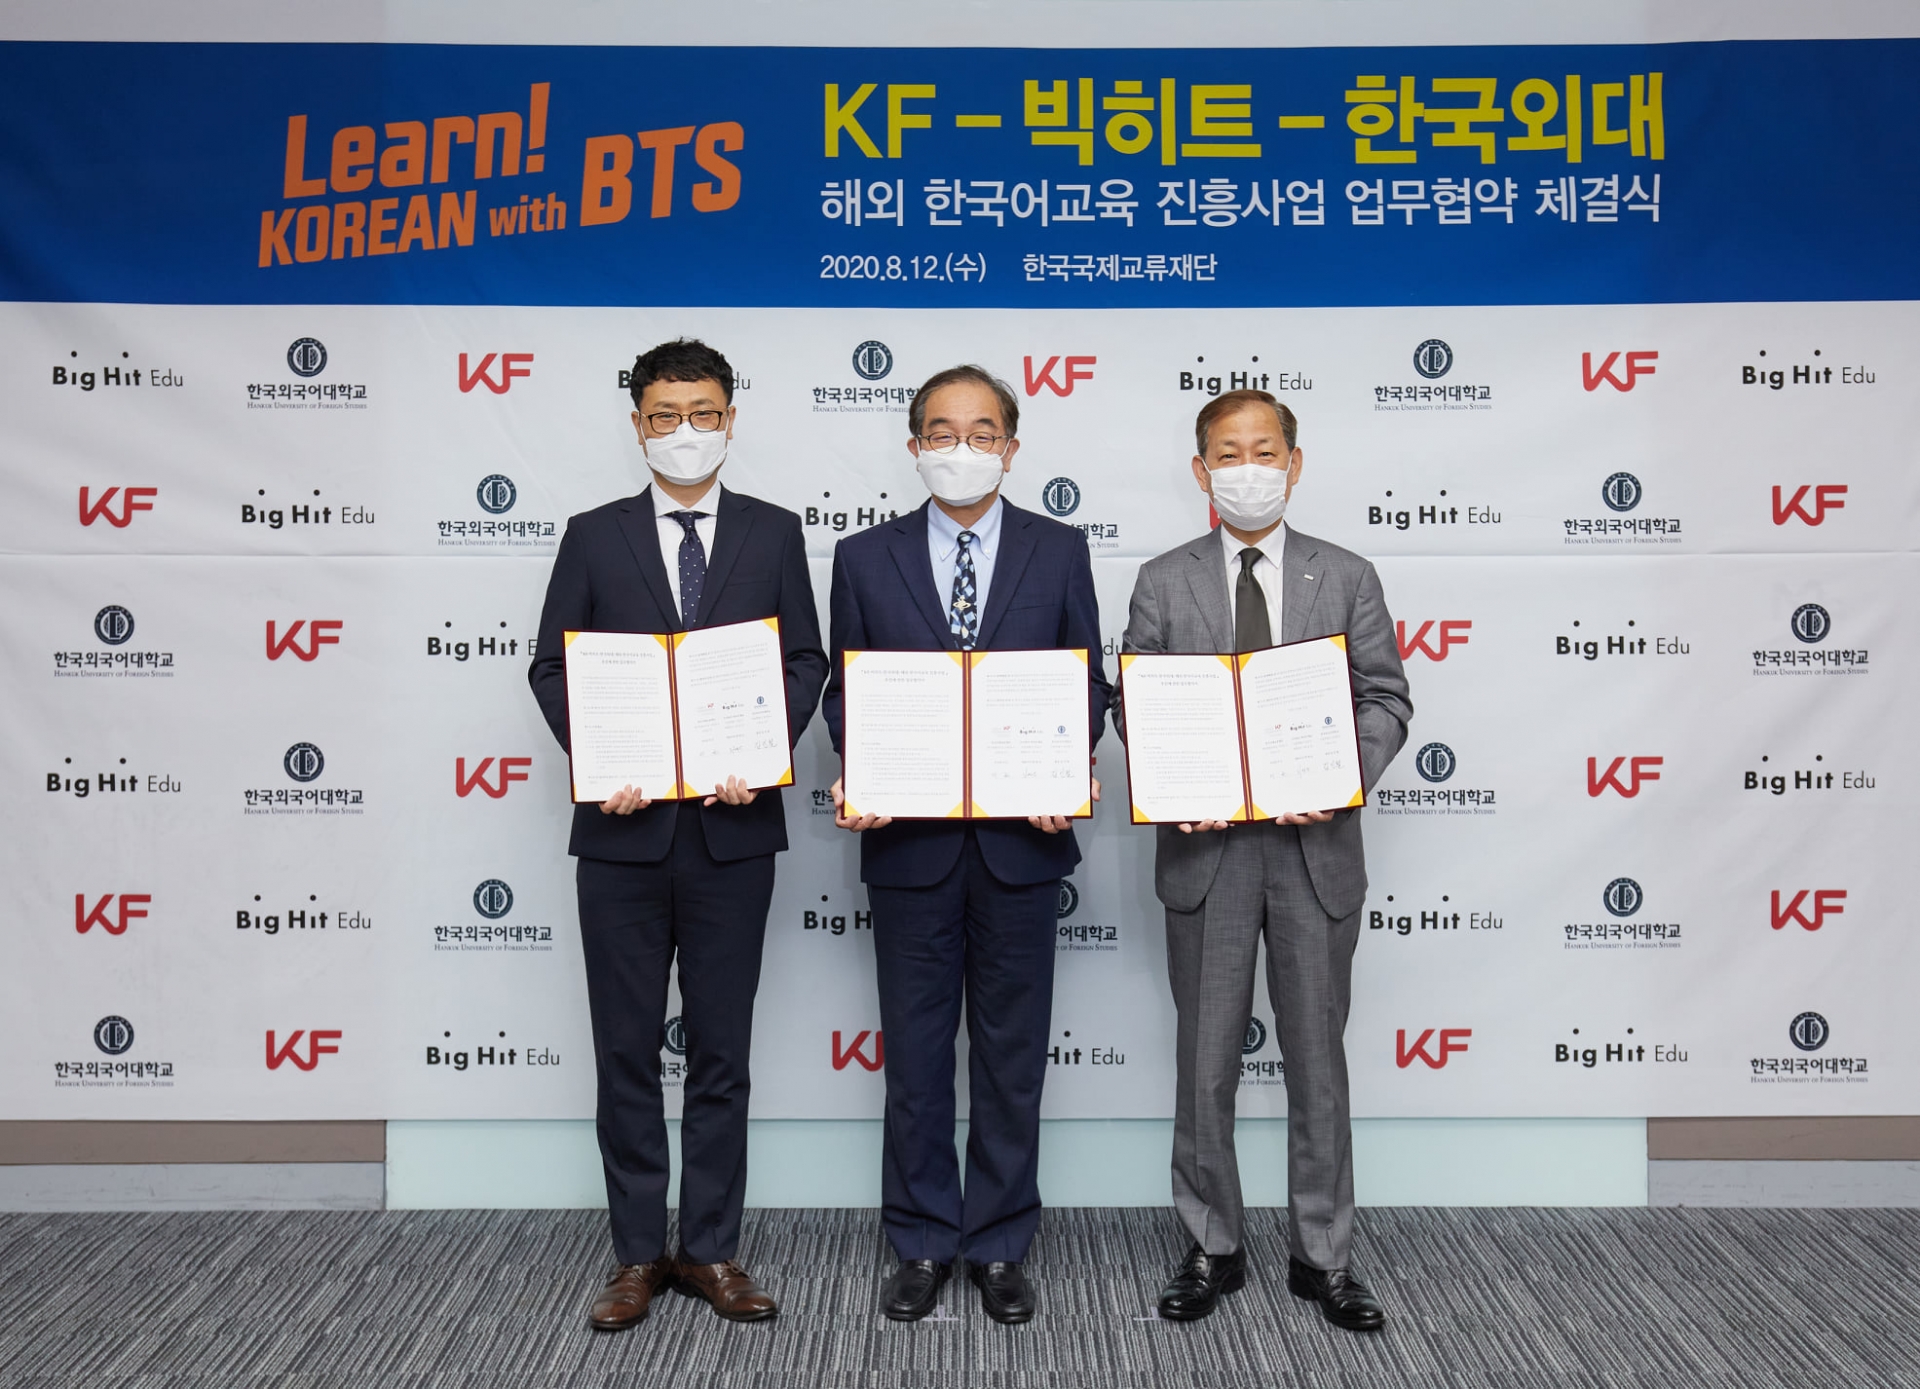 learn korean with k pop group bts